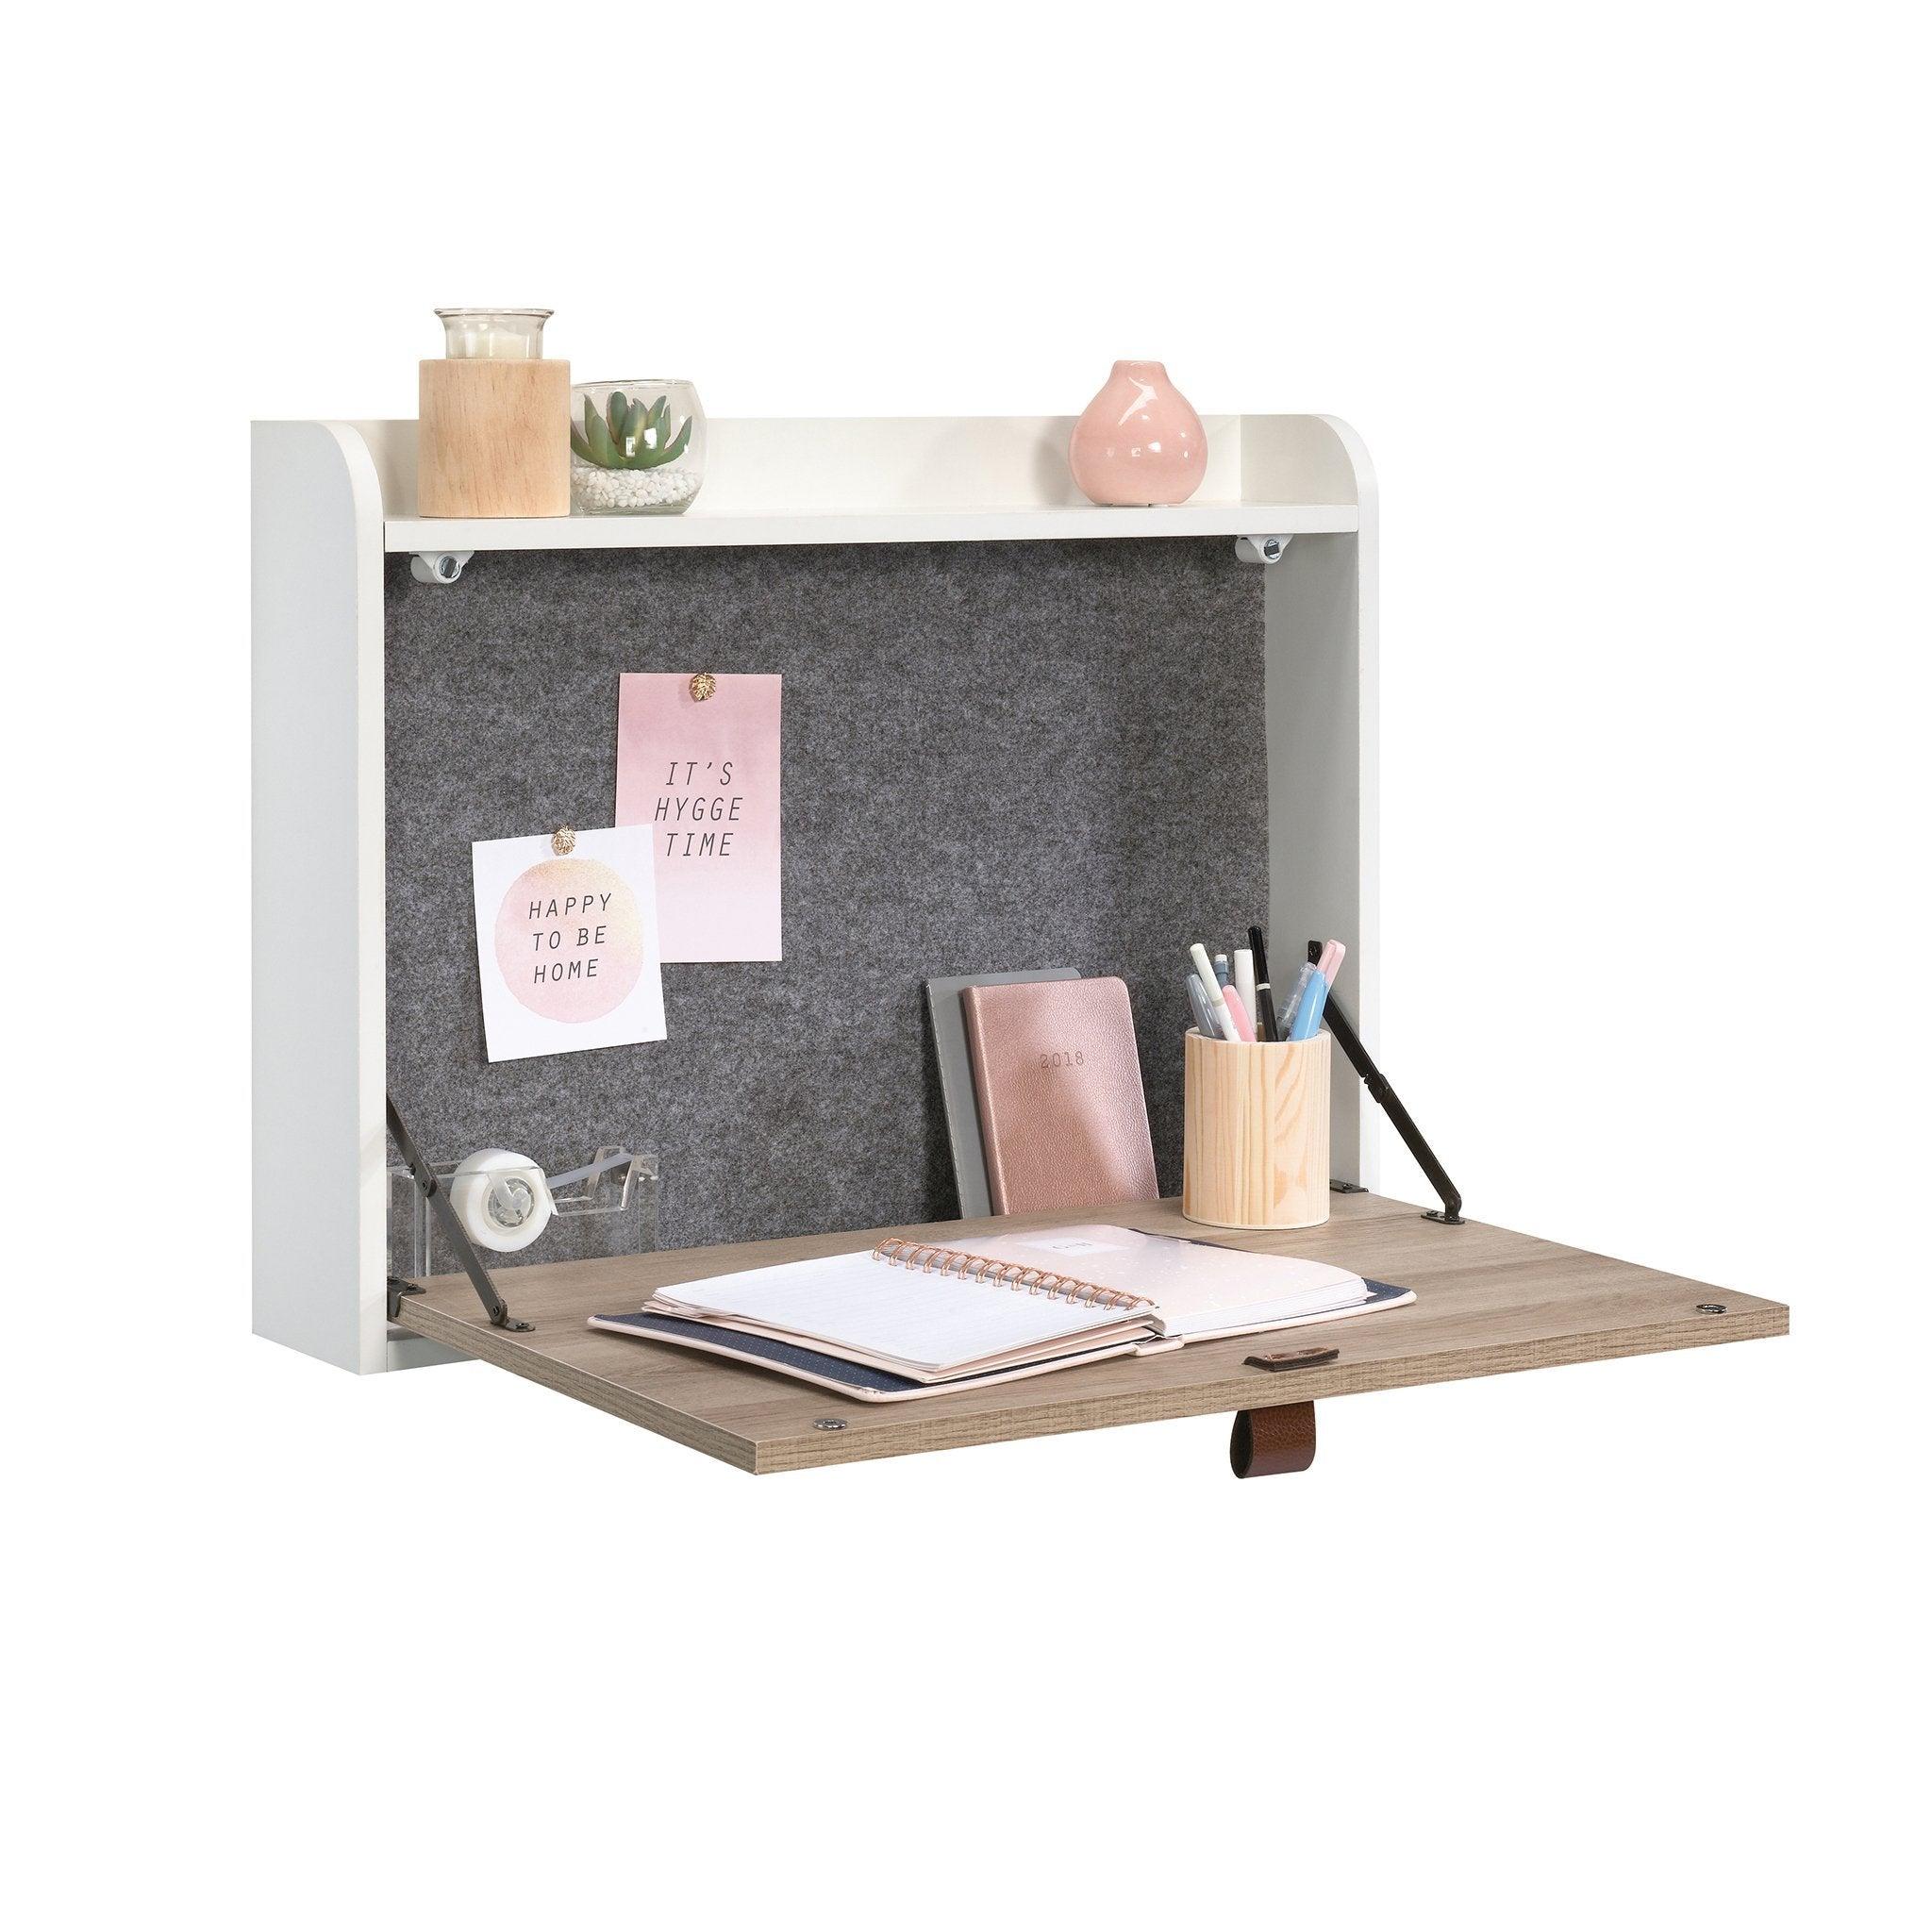 Avon leather handled foldaway wall desk - white - image 9